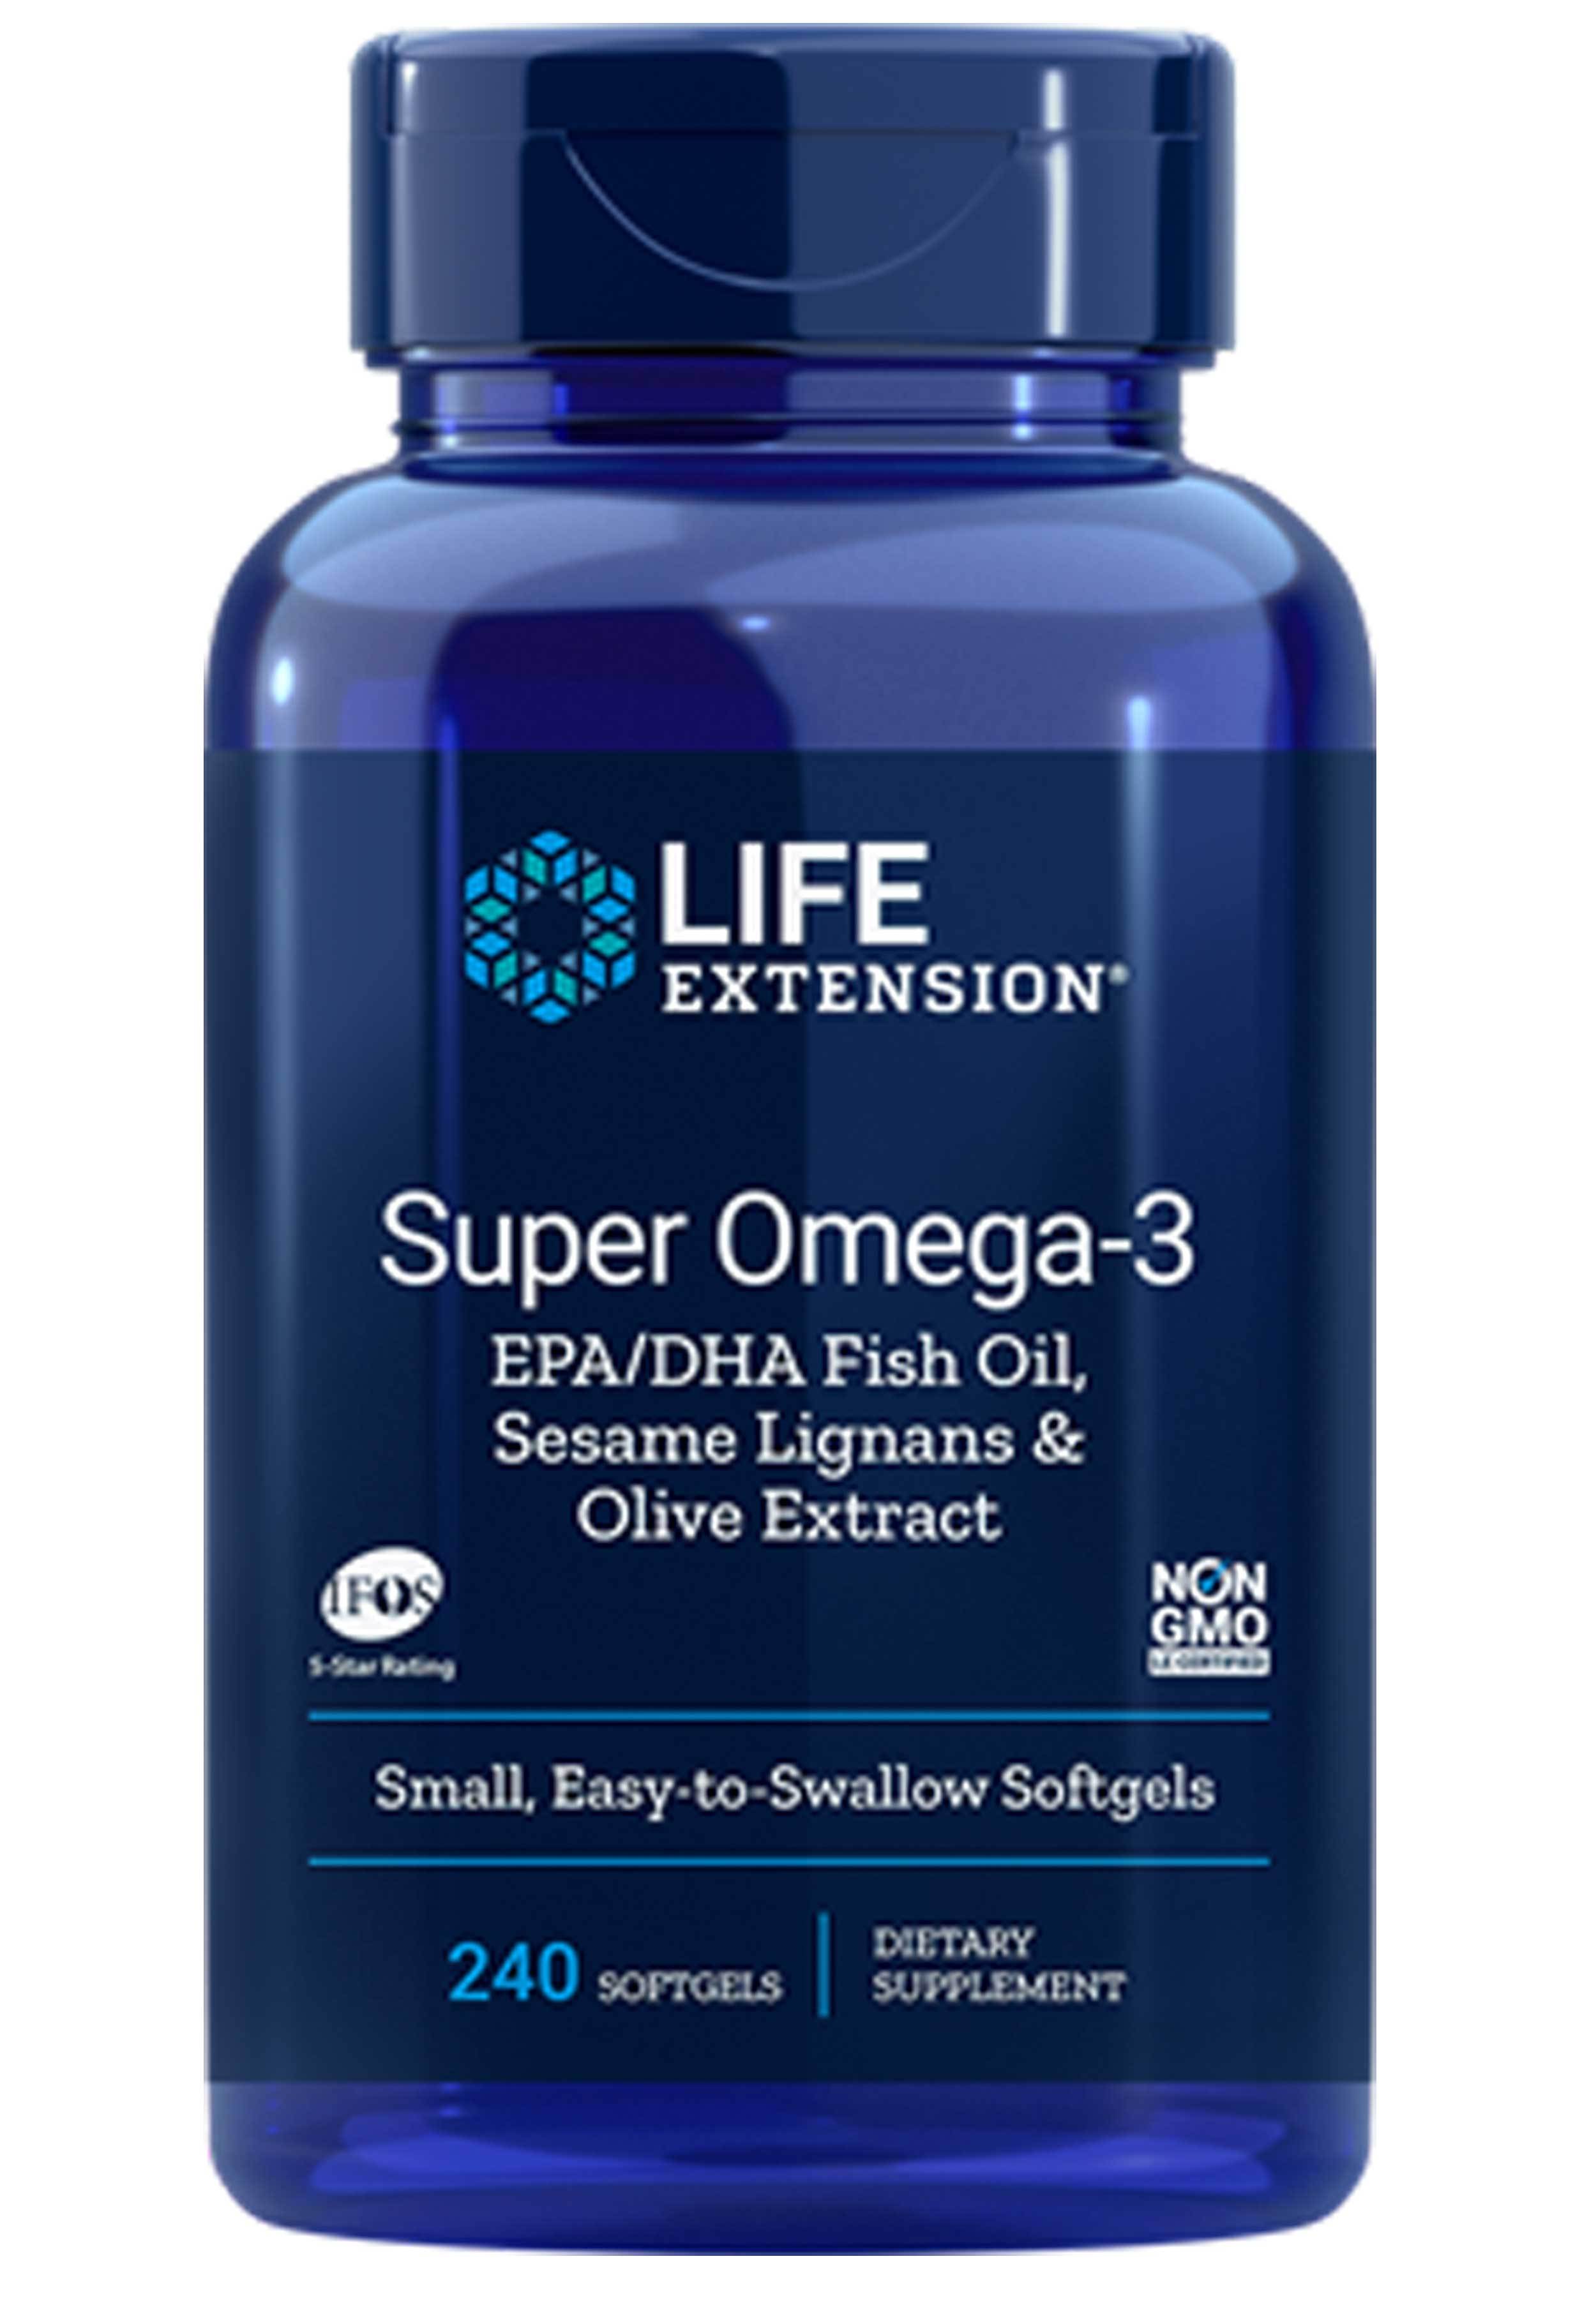 Life Extension Super Omega-3 EPA/DHA Fish Oil, Sesame Lignans & Olive Extract